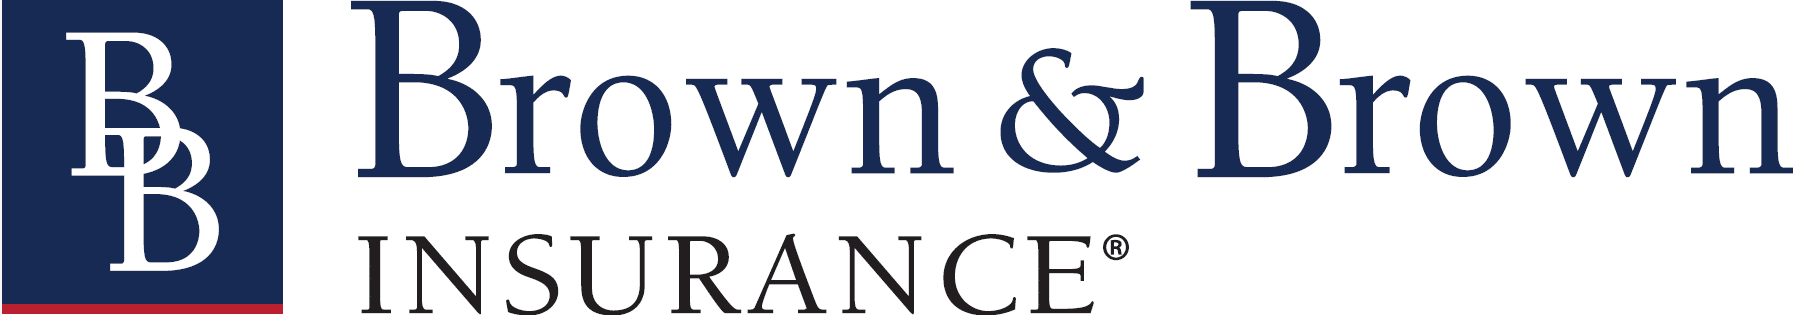 Brown & Brown Logo 01